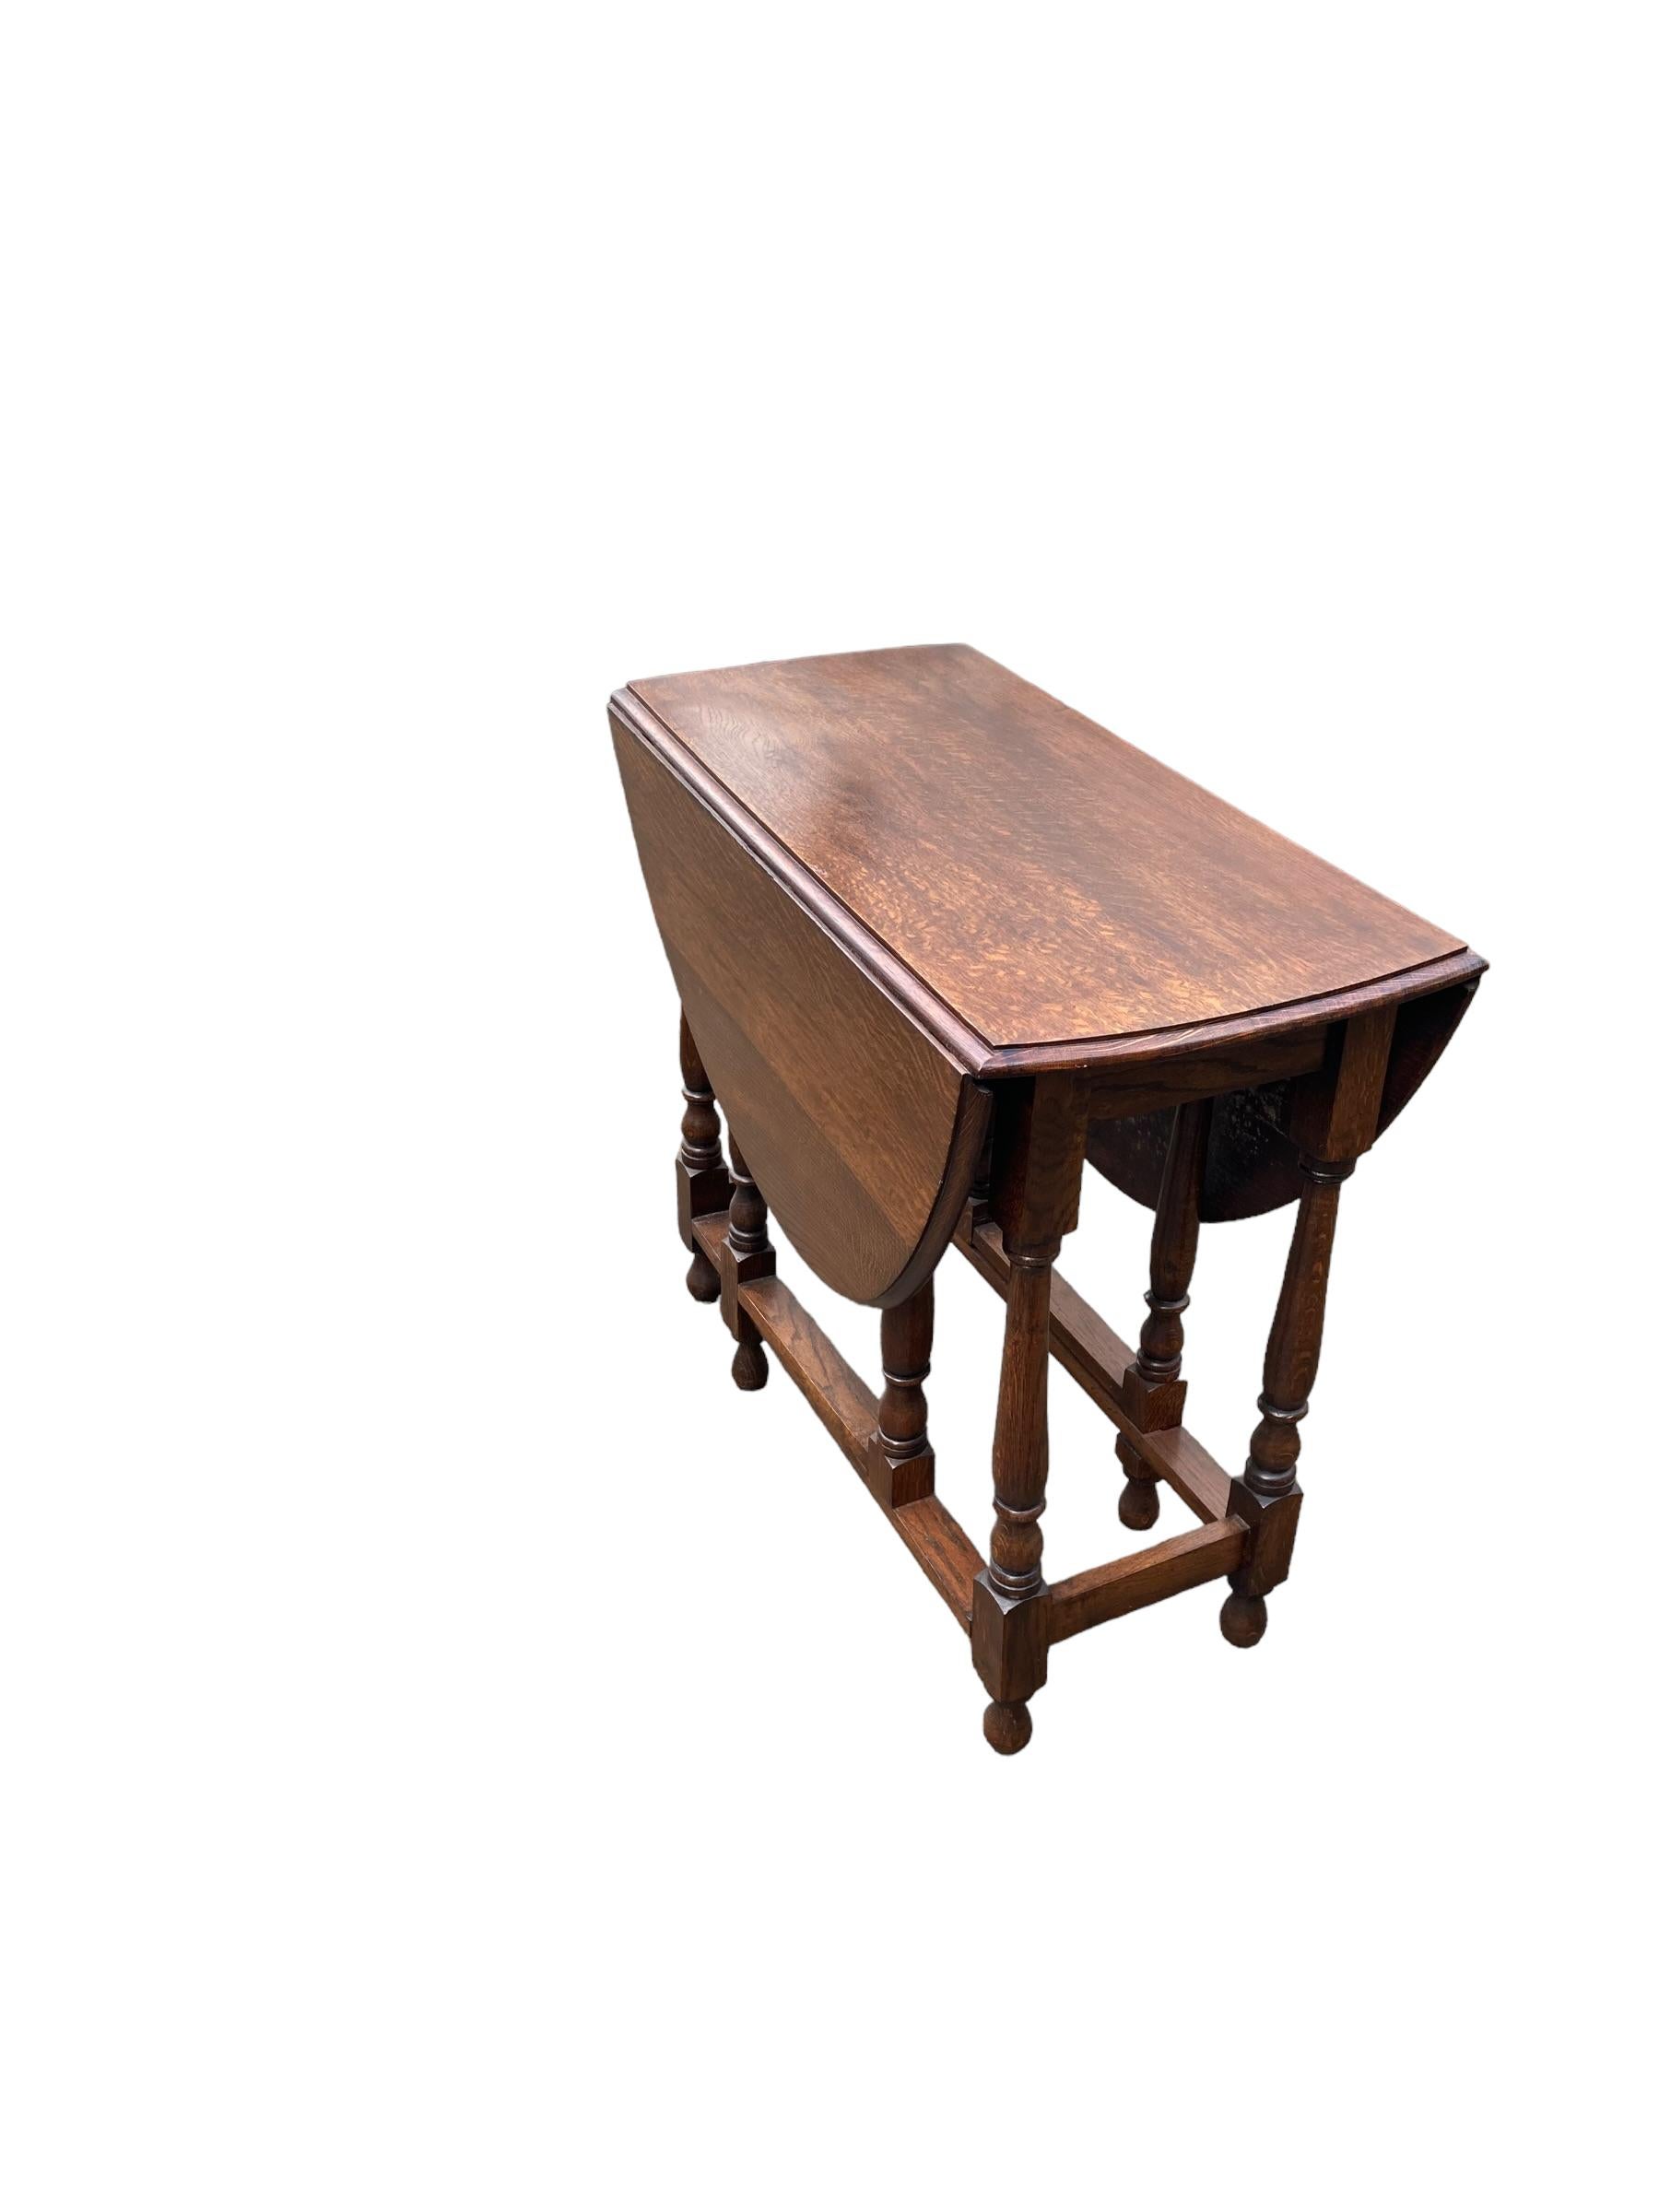 Victorian Oval shaped Oak Gate Leg dining table